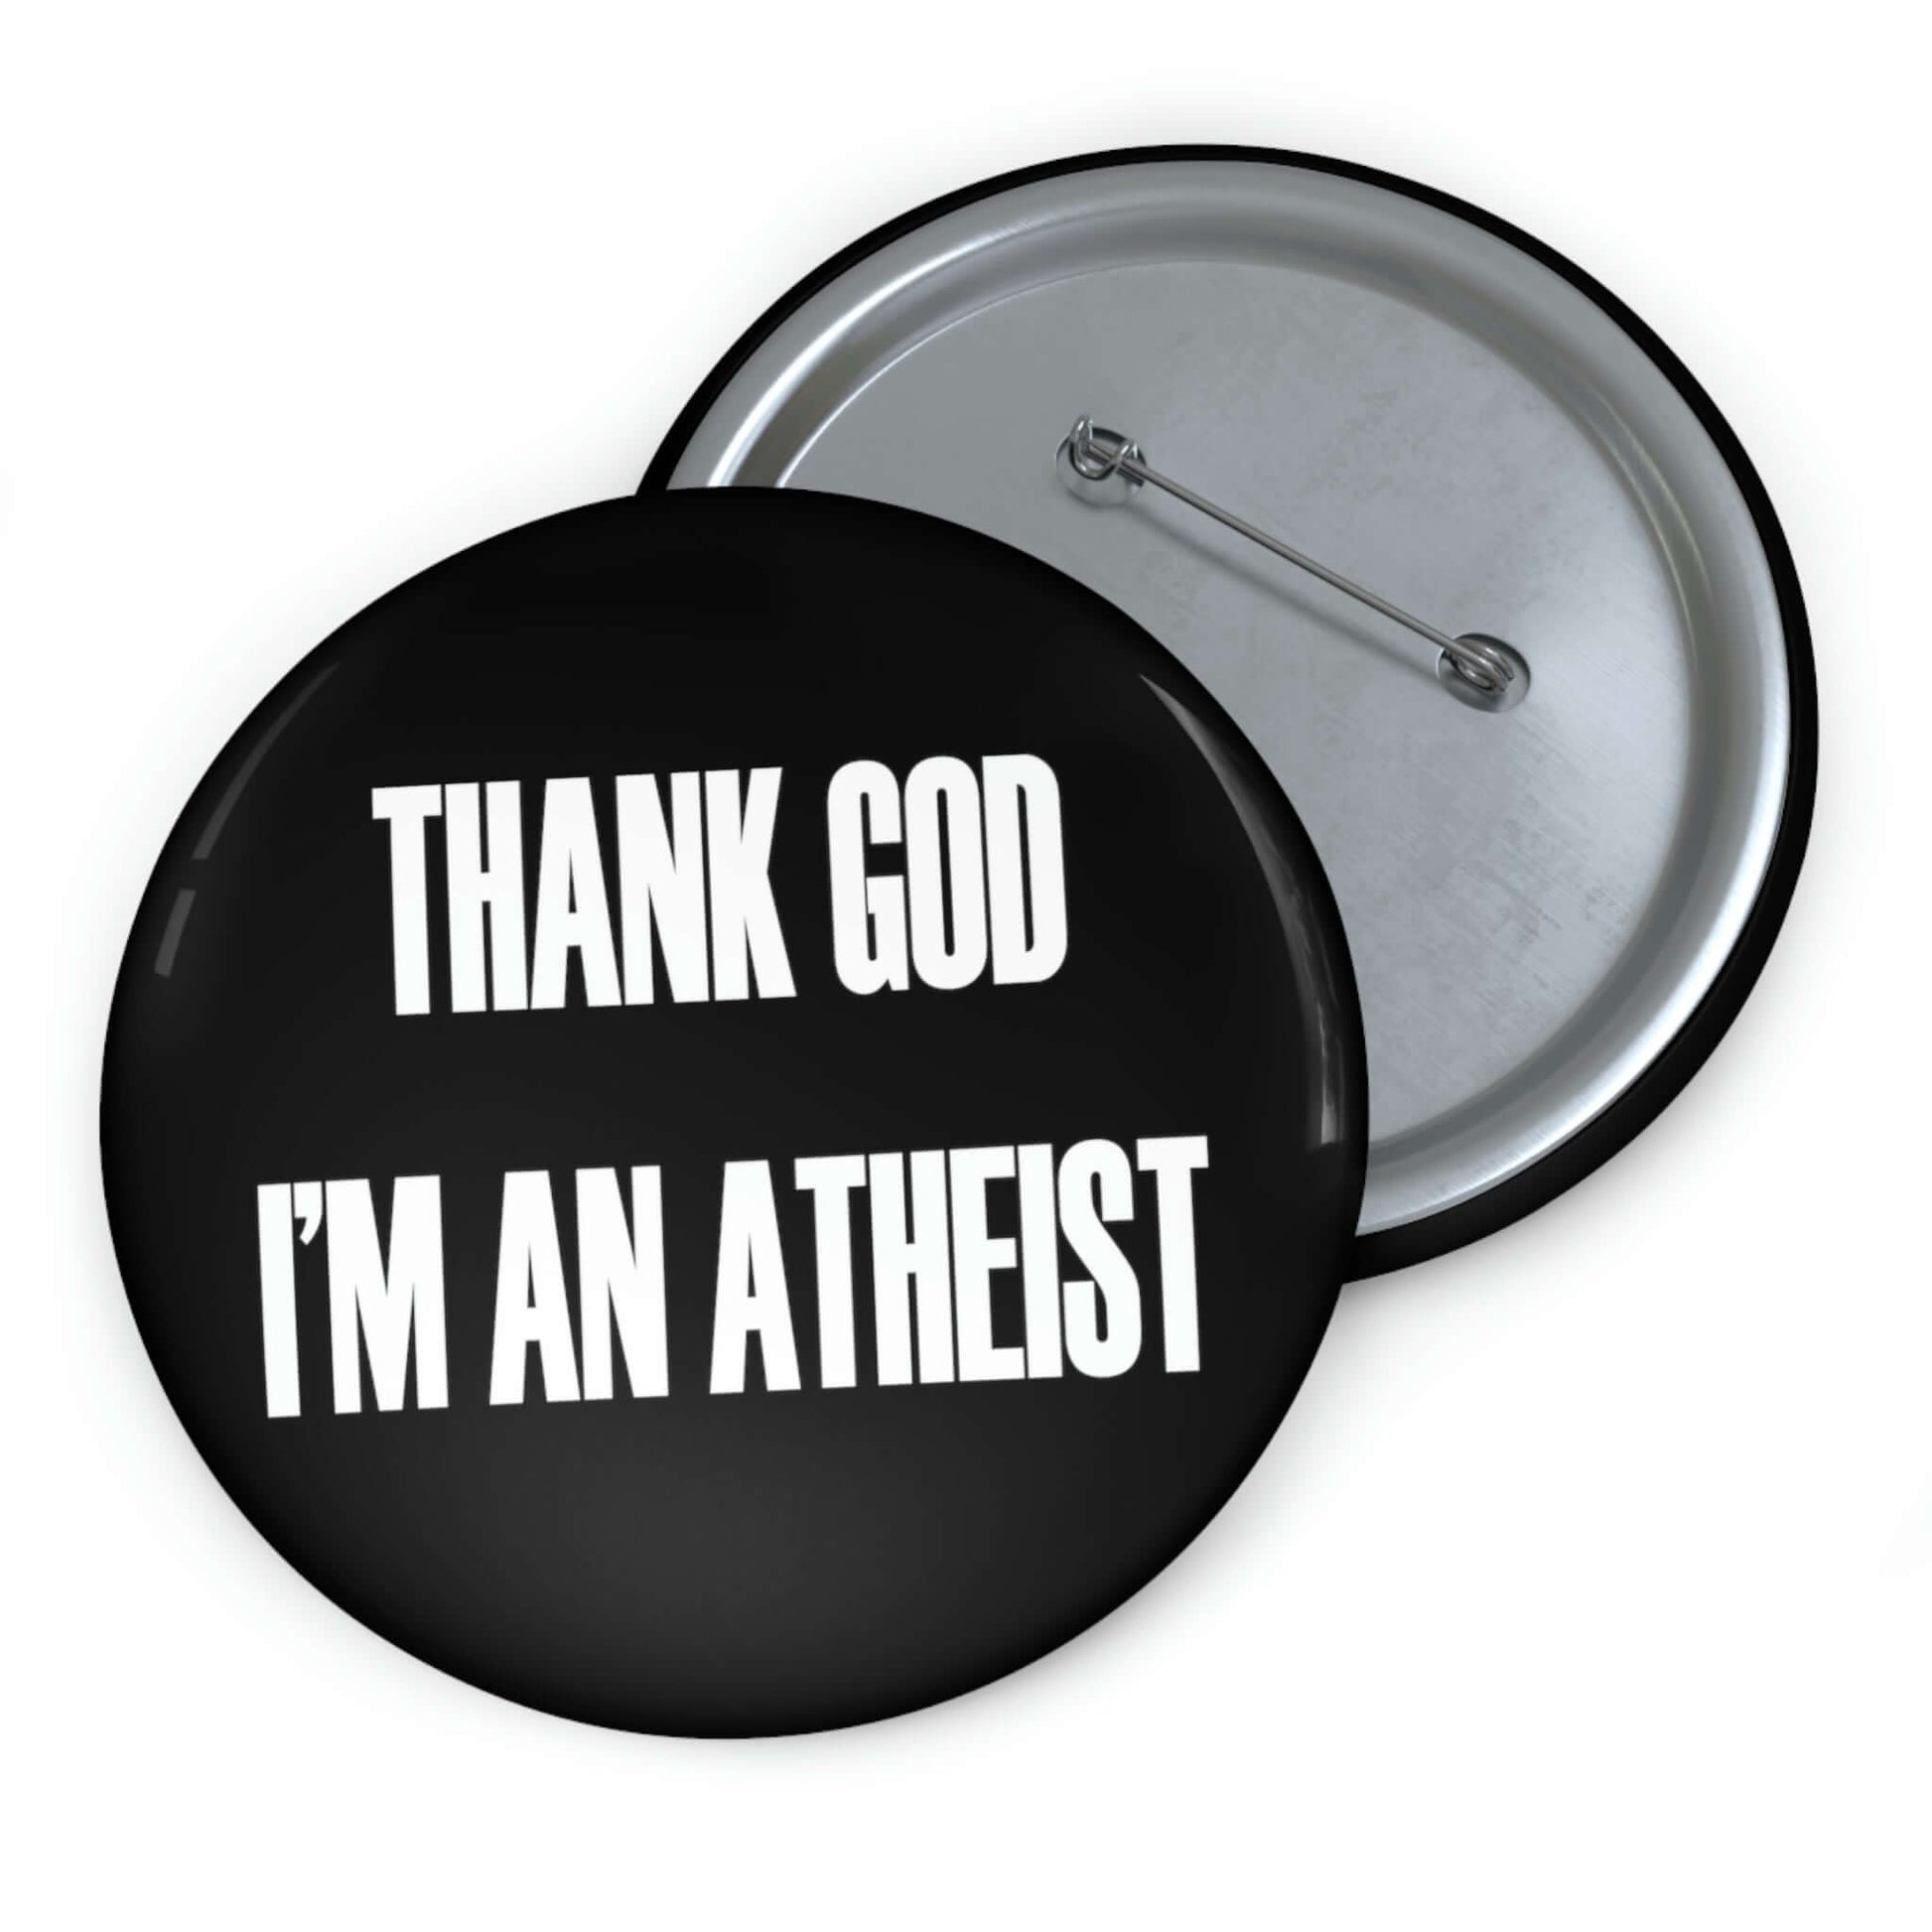 Pinback button that says Thank God I'm an atheist.